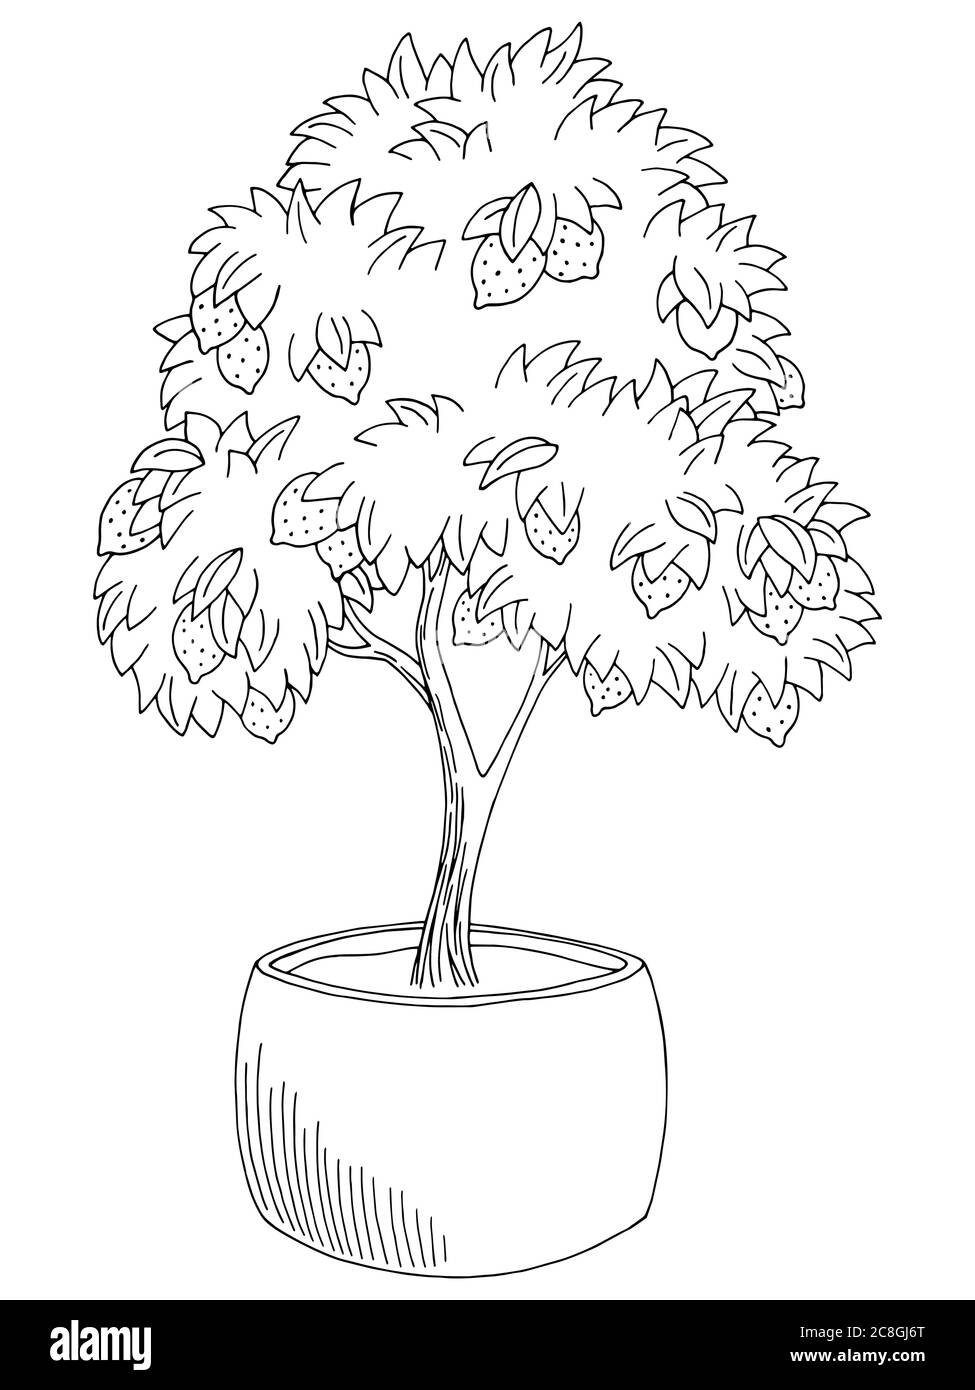 Zitronenbaum Obst Grafik schwarz weiß isoliert Skizze Illustration Vektor Stock Vektor